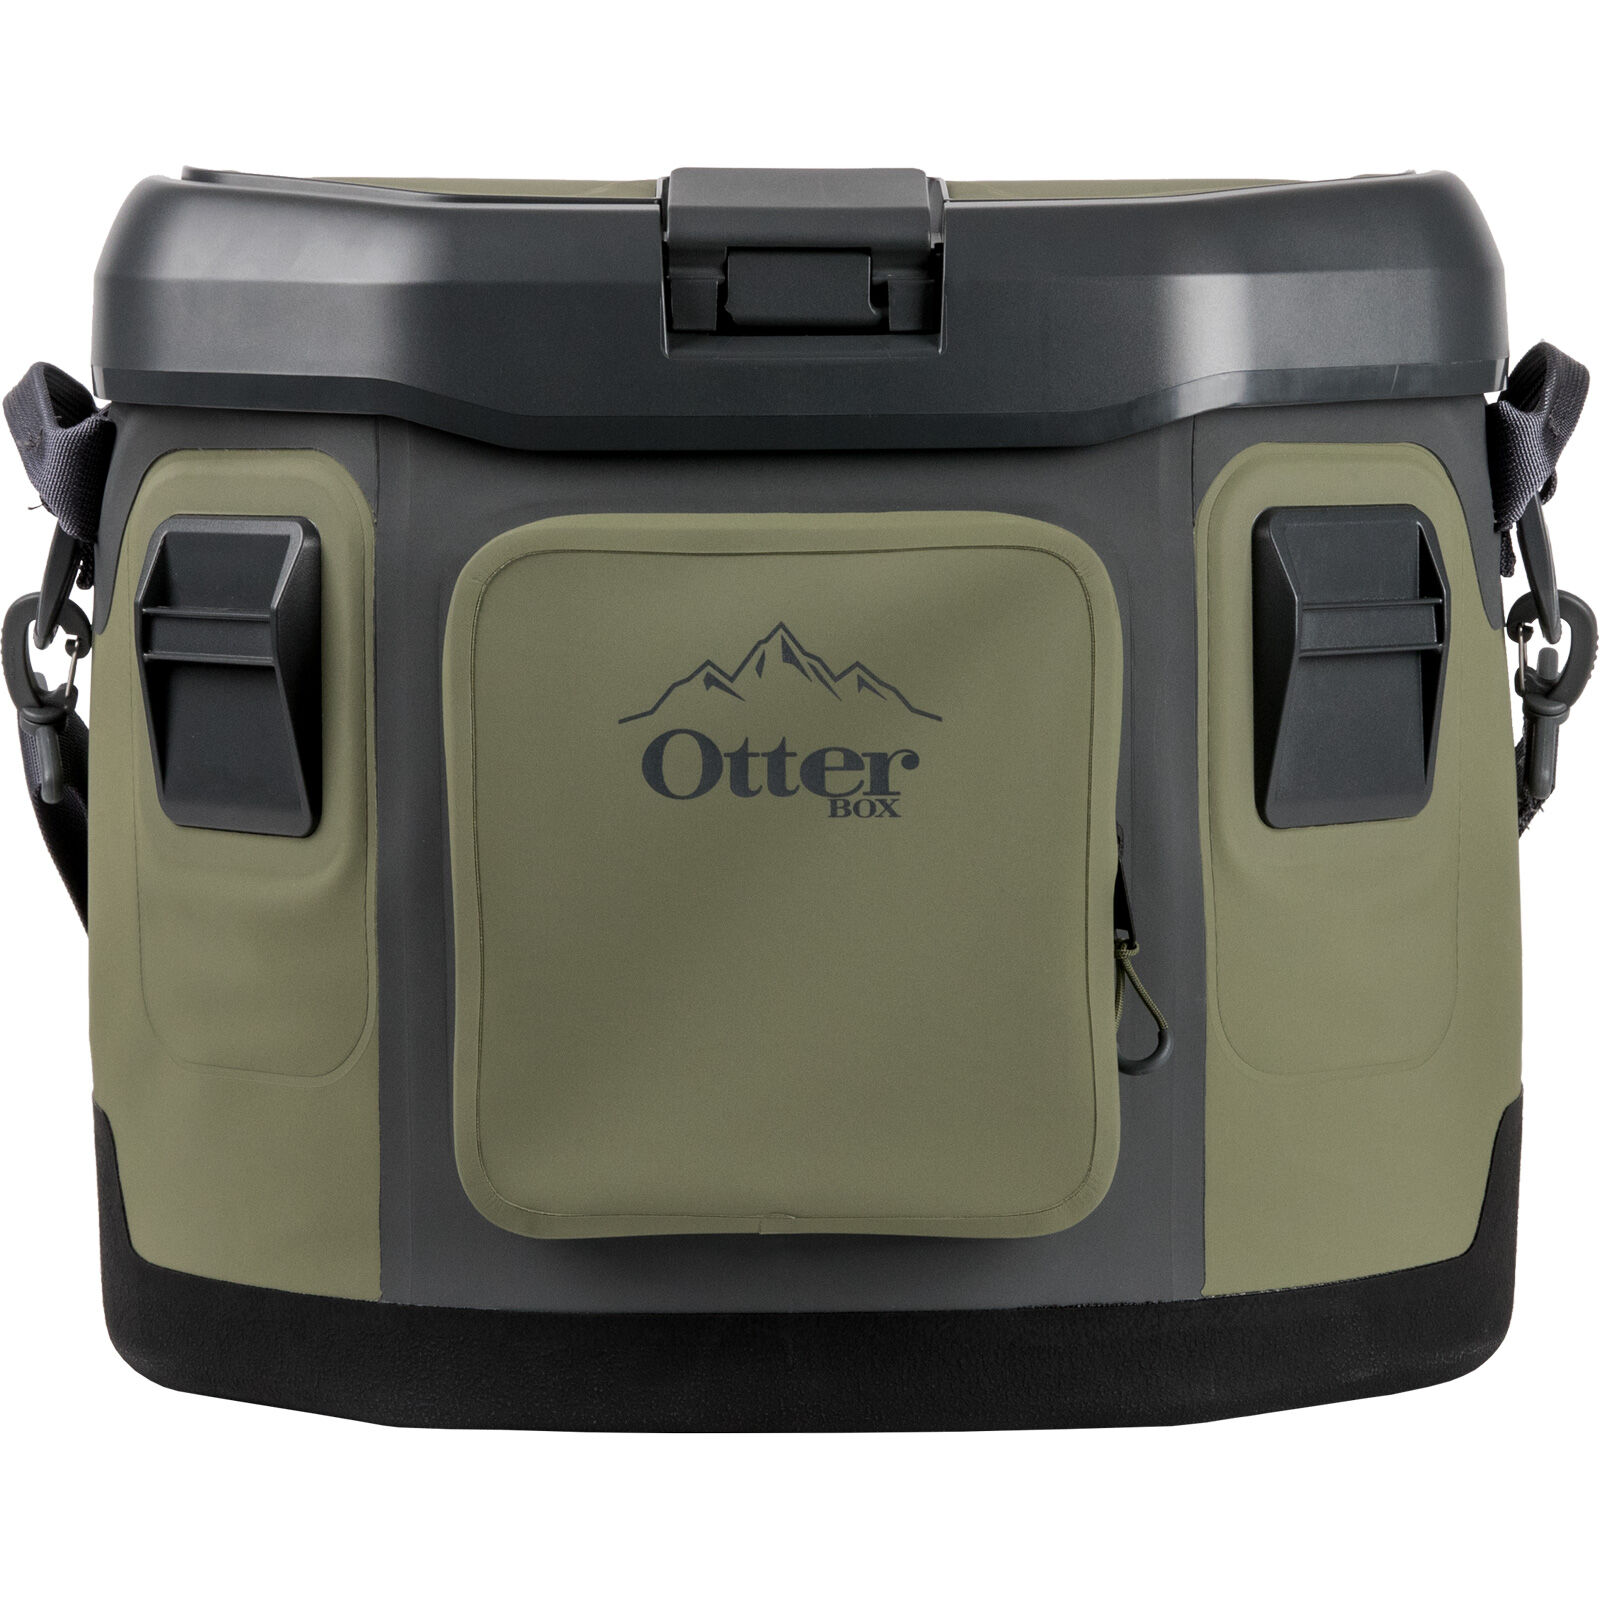 OtterBox Trooper Cooler